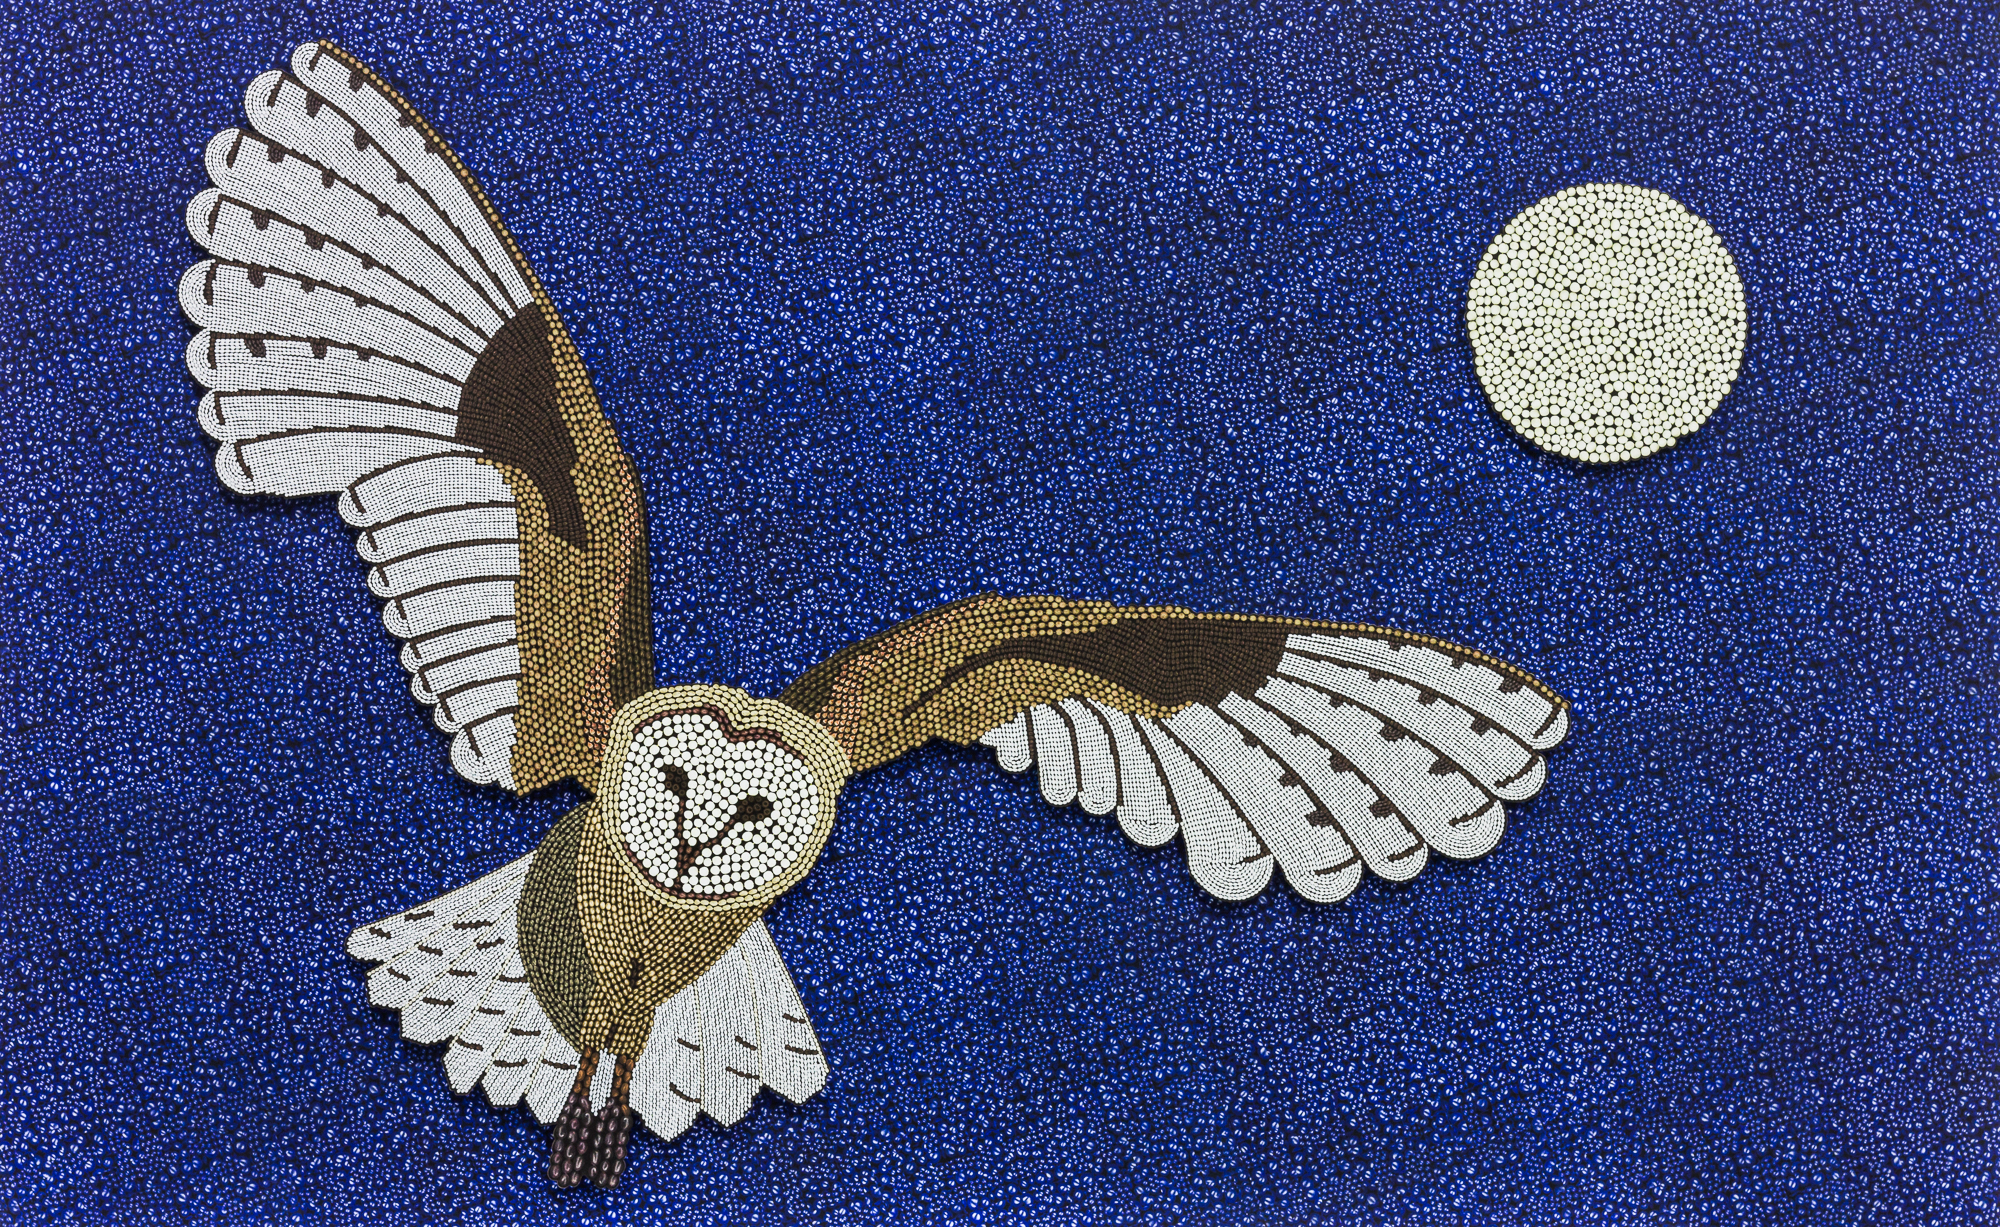 Barn Owl and Moon, 2019